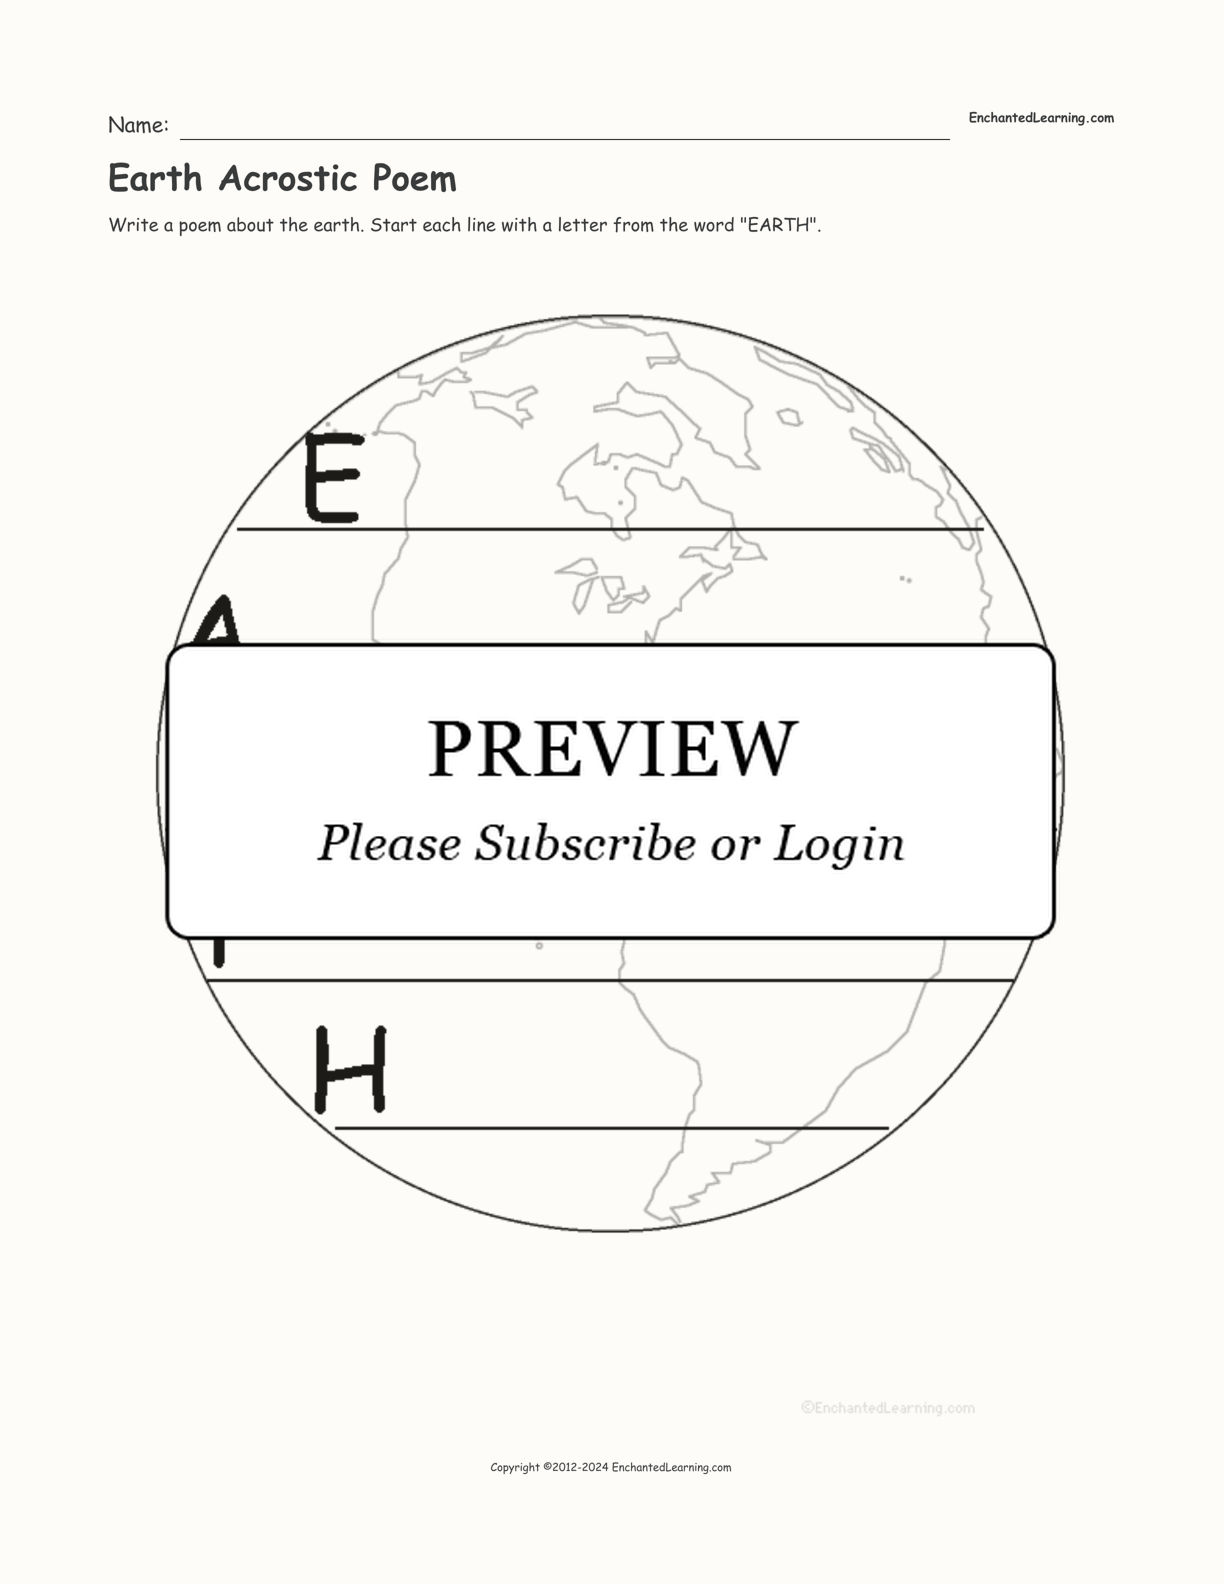 Earth Acrostic Poem interactive worksheet page 1